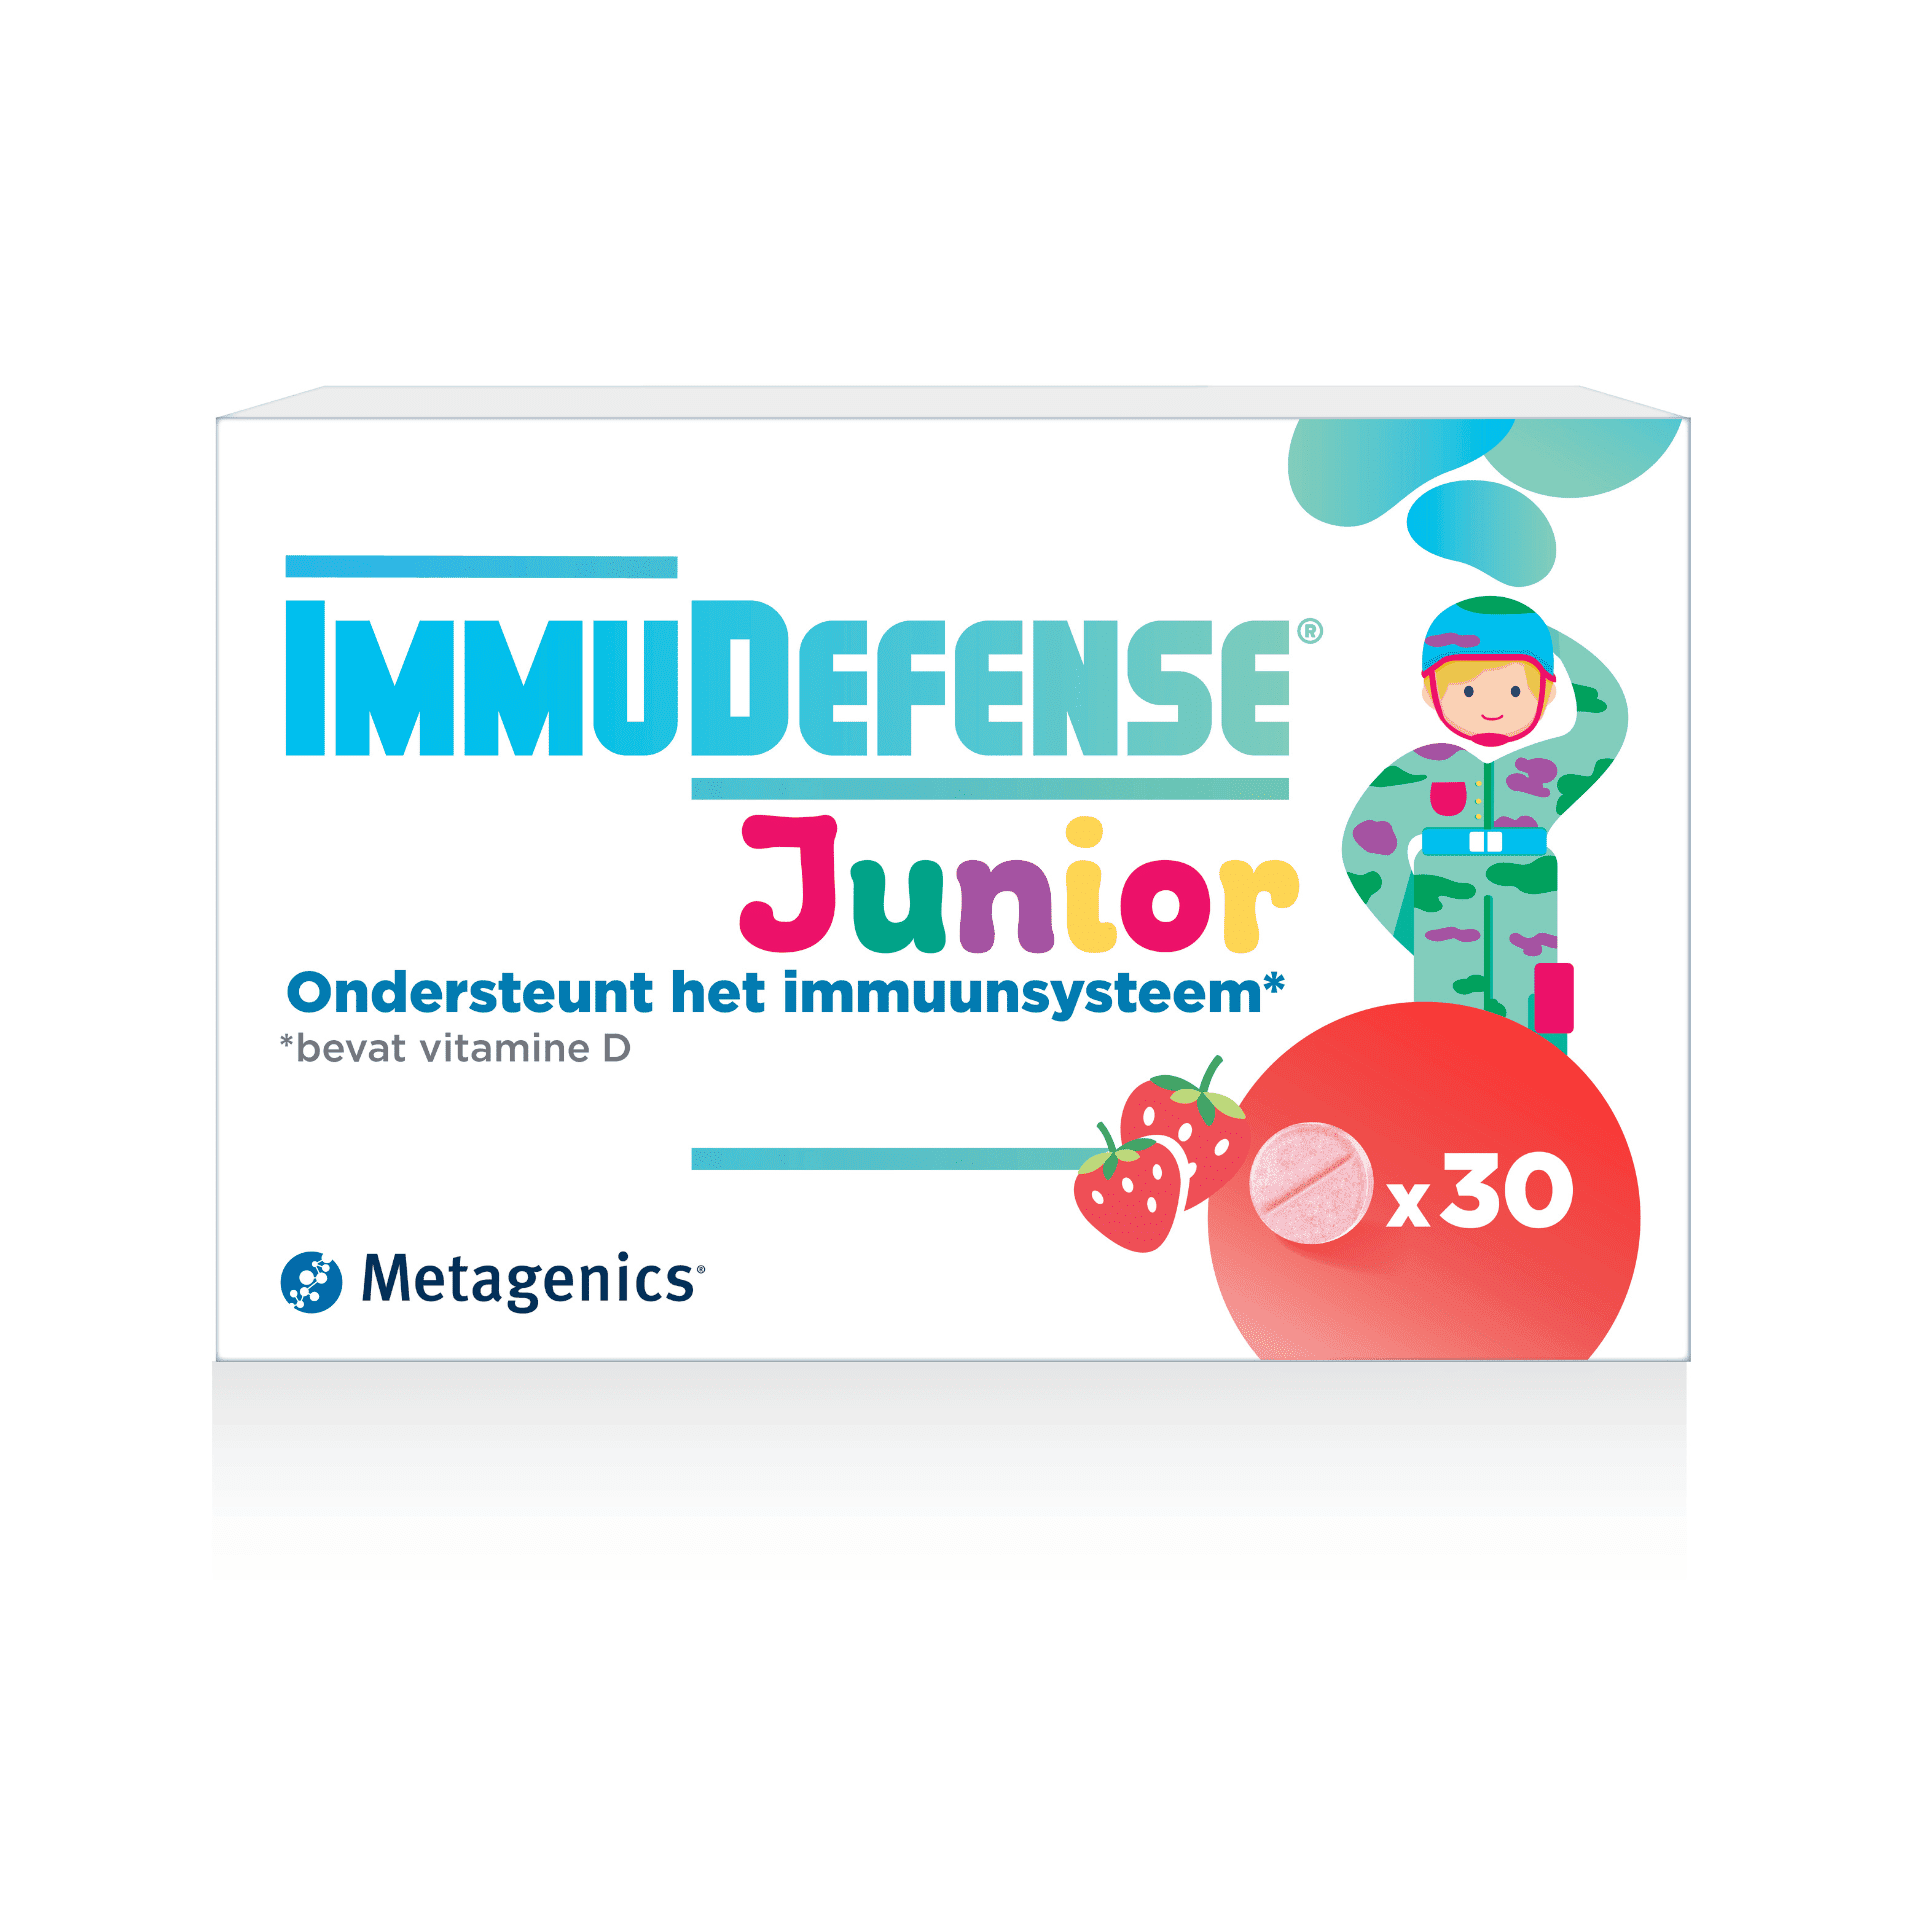 Immudefense Junior Comp A Macher 30 Metagenics